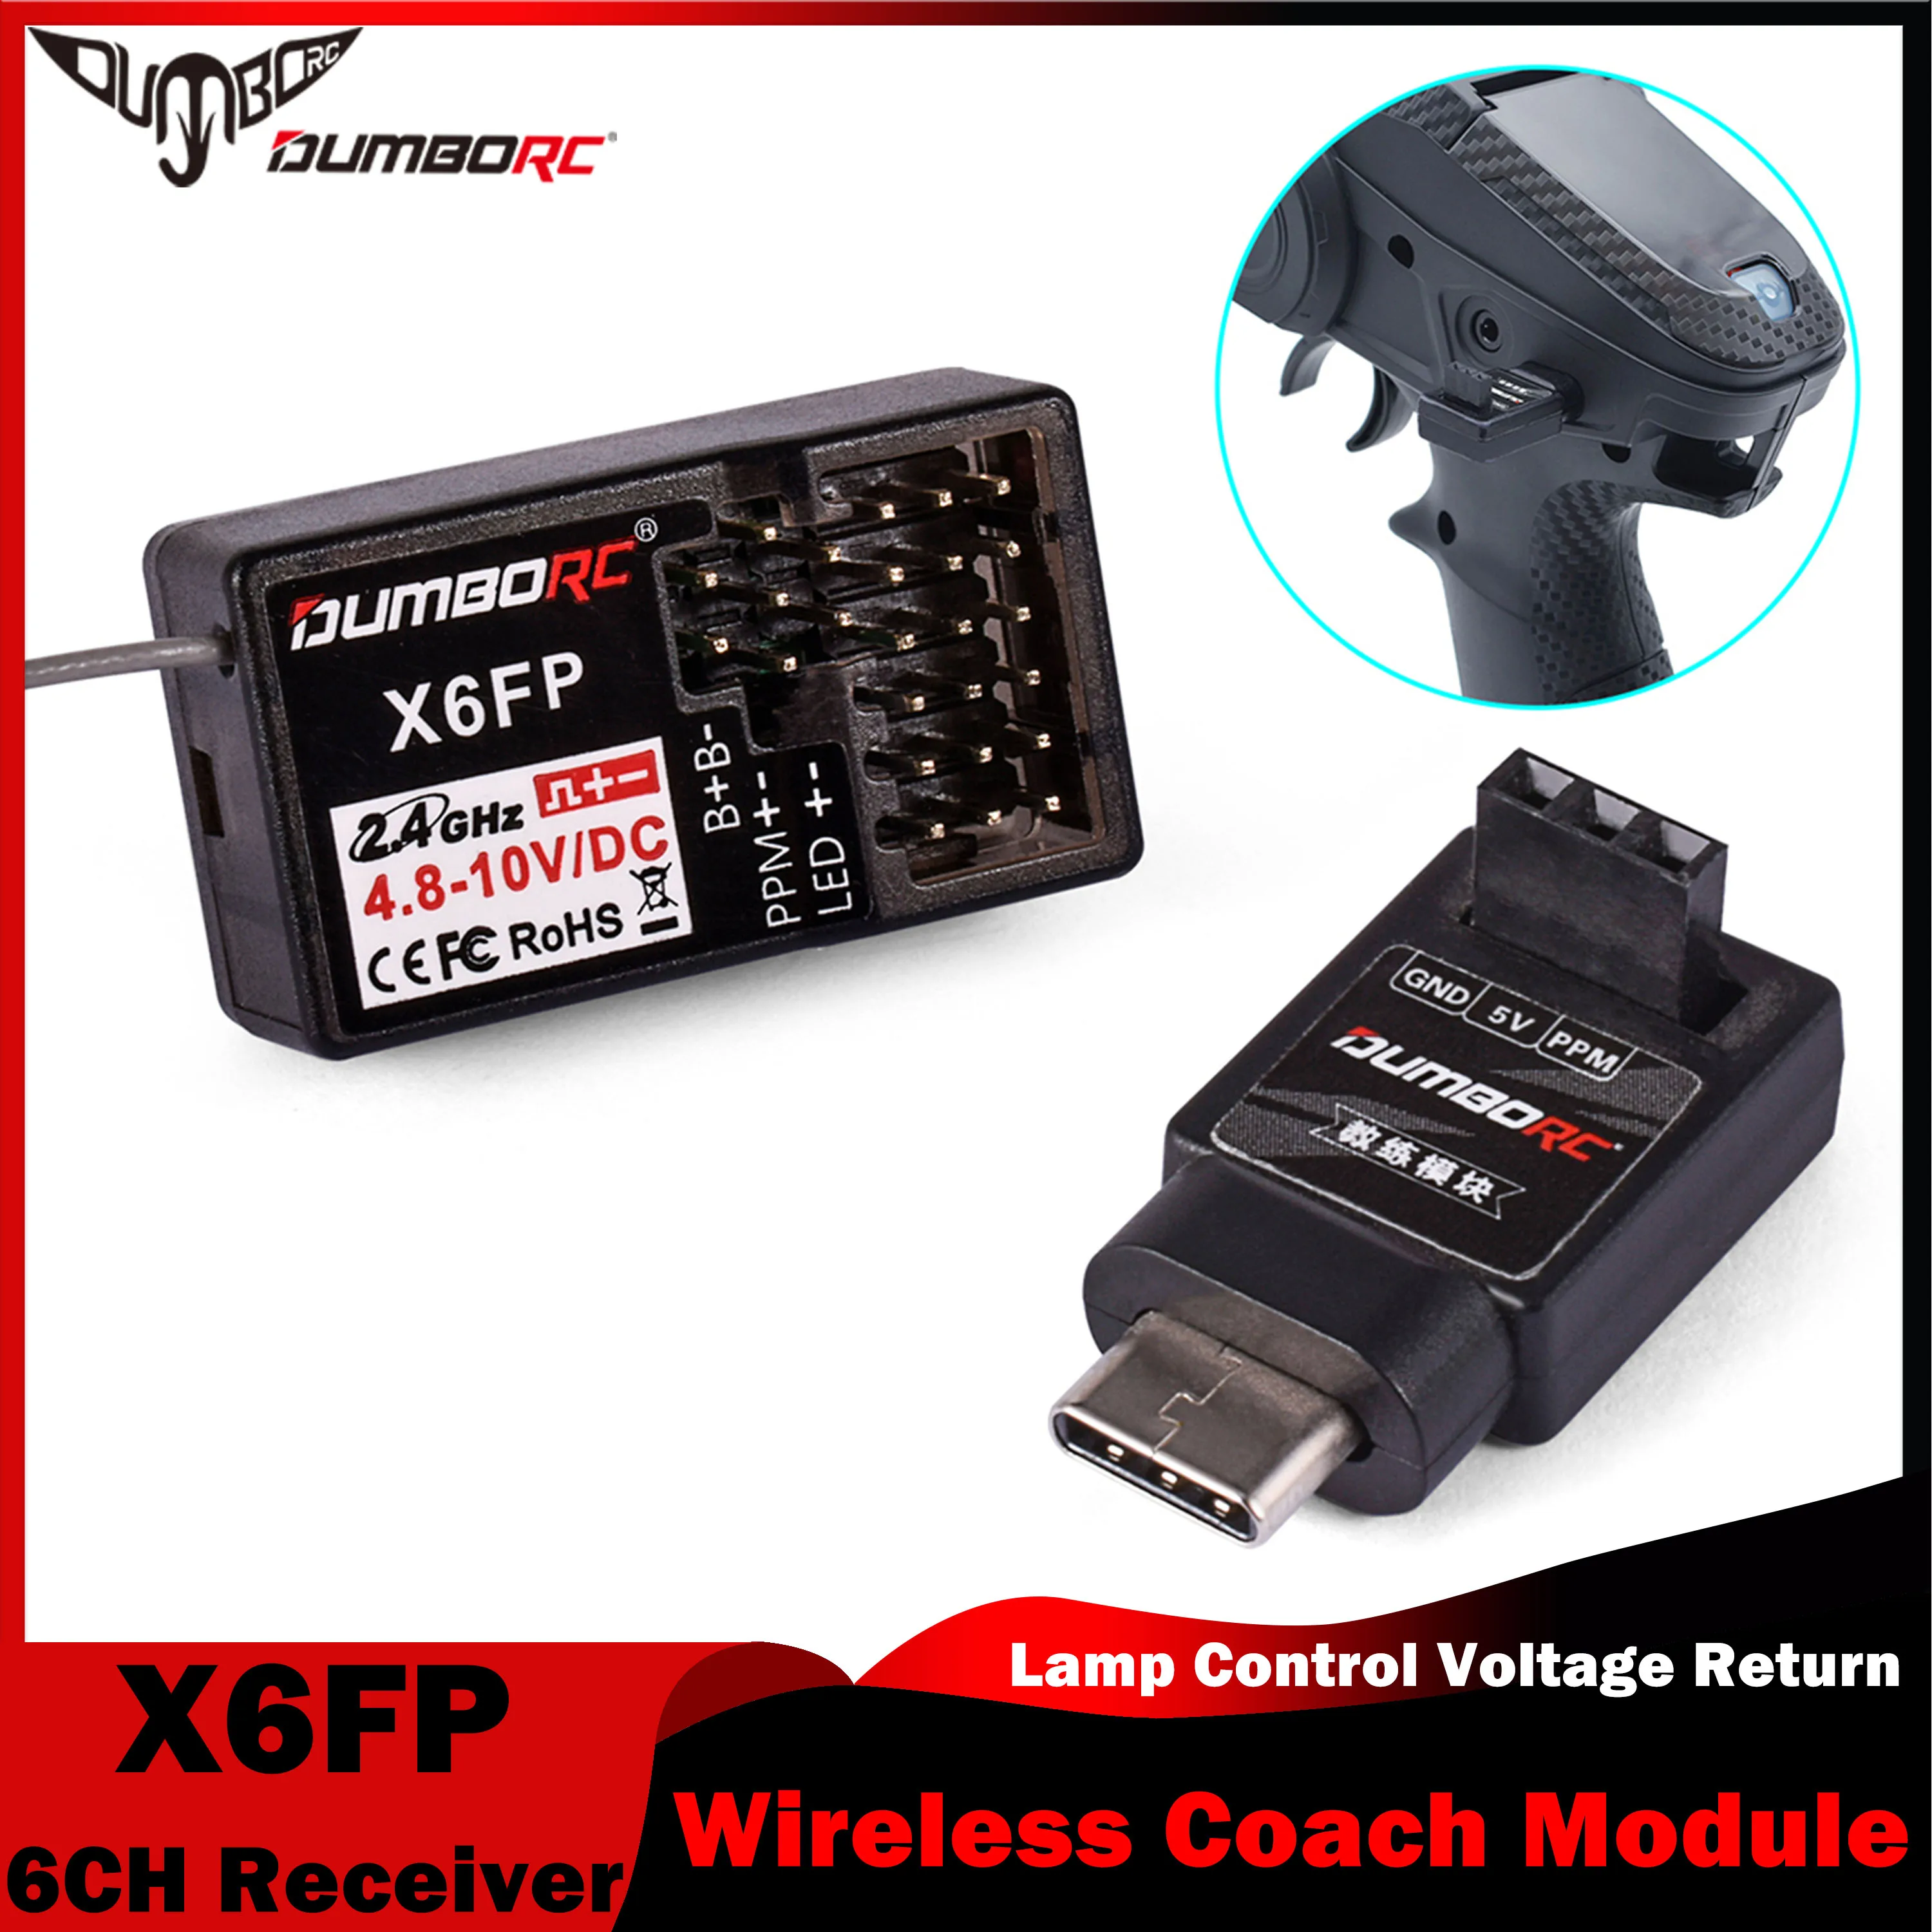 

DUMBORC 6CH Receiver X6FP Wireless Coach Module Lamp Control Voltage Return for RC Car Boat 2.4GHZ Transmitter X5P/X6PM/X10P/X6P